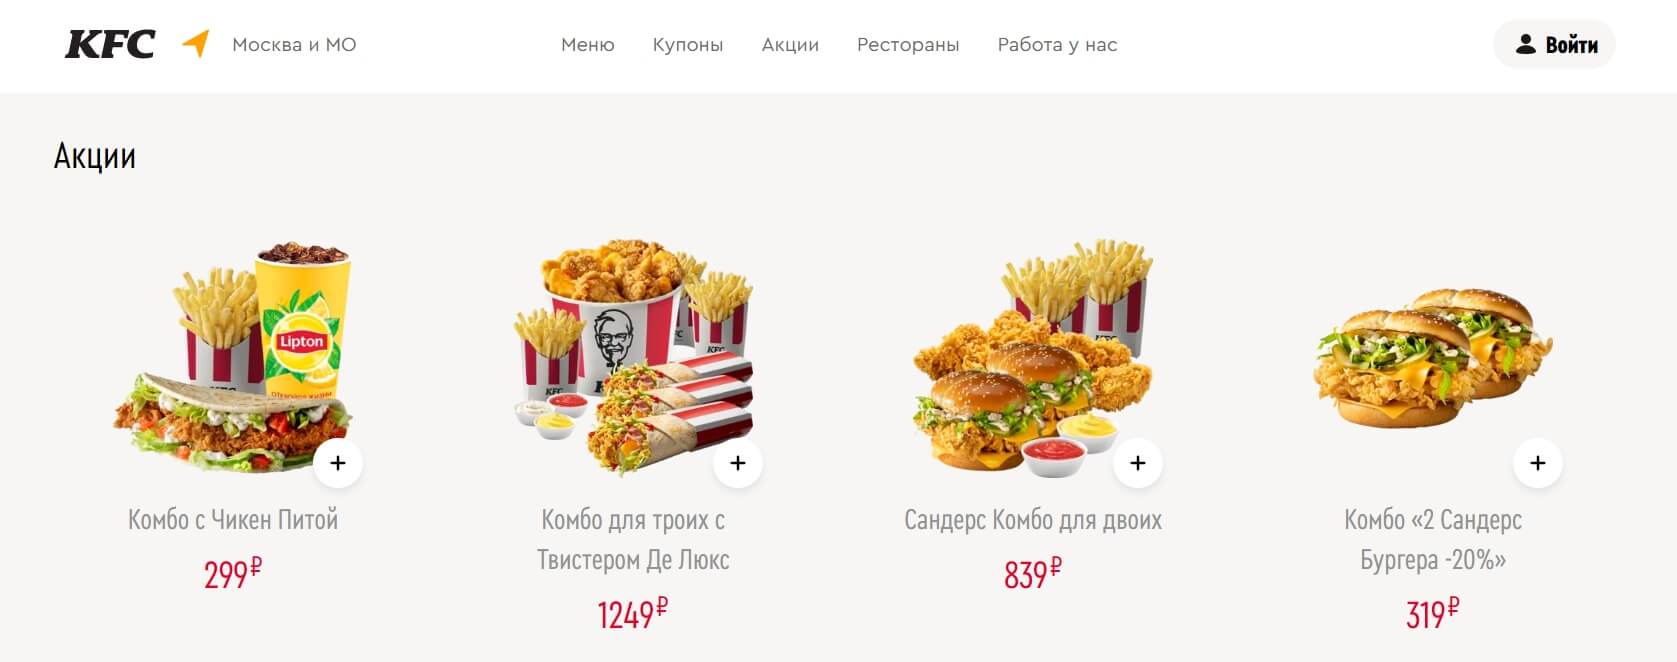 скрин с сайта KFC